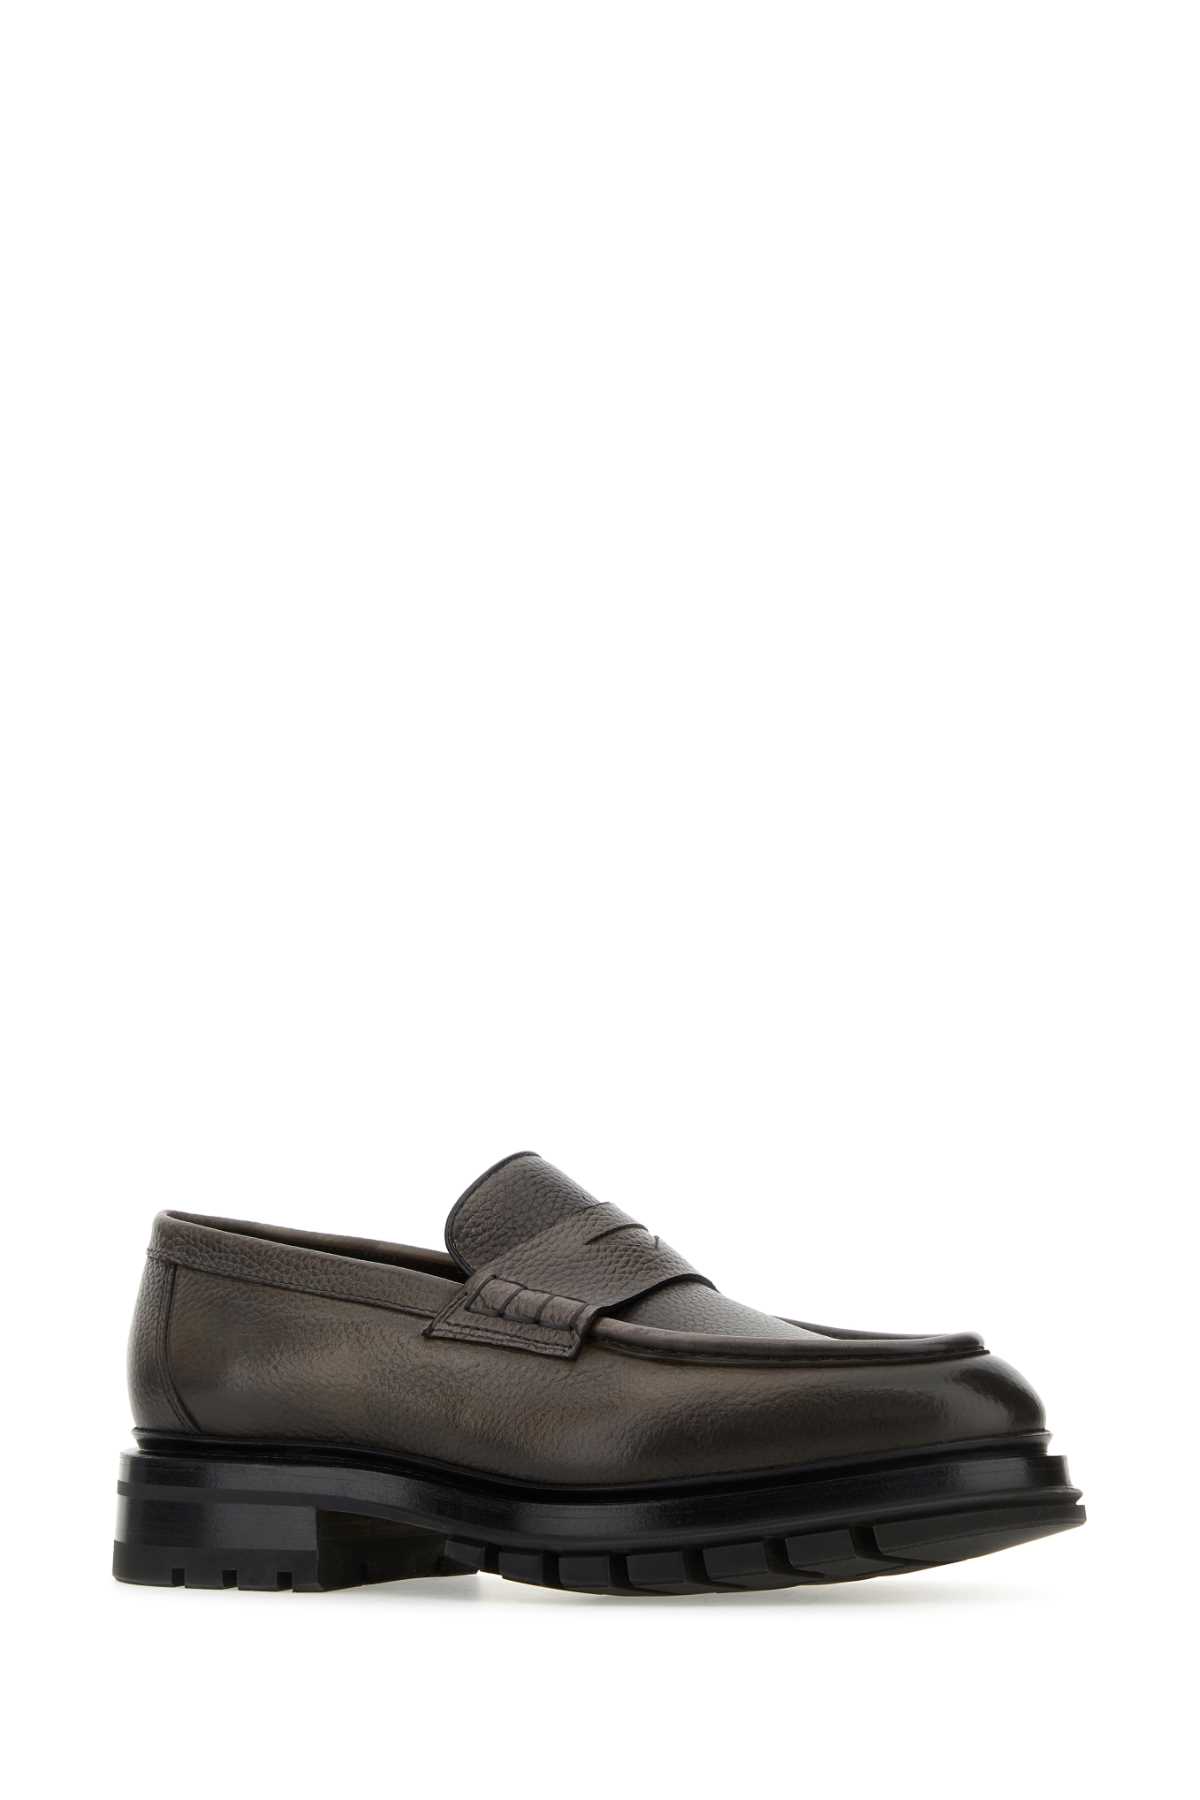 Santoni Dark Grey Leather Loafers In G27